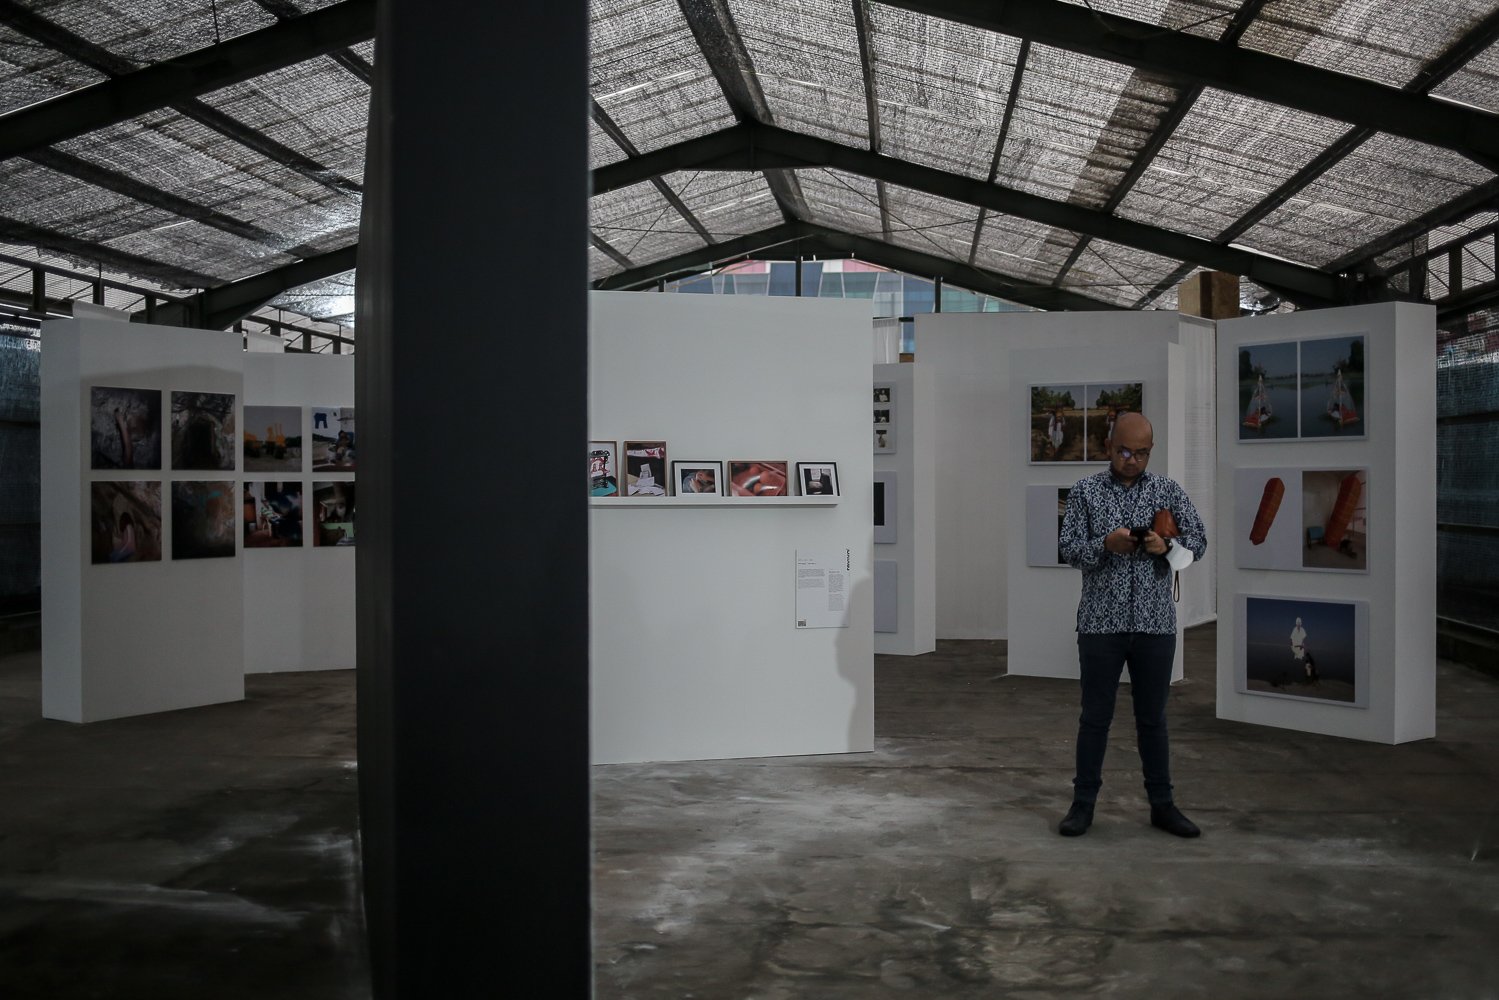 Pengunjung melihat karya fotografi yang dipamerkan dalam Jakarta International Photo Festival (JIPFest) 2022 di Rooftop Soup N Film, Jakarta, Jumat (9/9). JIPFest 2022 menghadirkan kurang lebih 50 tokoh fotografi dari sembilan negara yang akan mengisi 53 acara dan berlangsung pada 9-25 September 2022 di lima lokasi area Blok M, Jakarta Selatan.